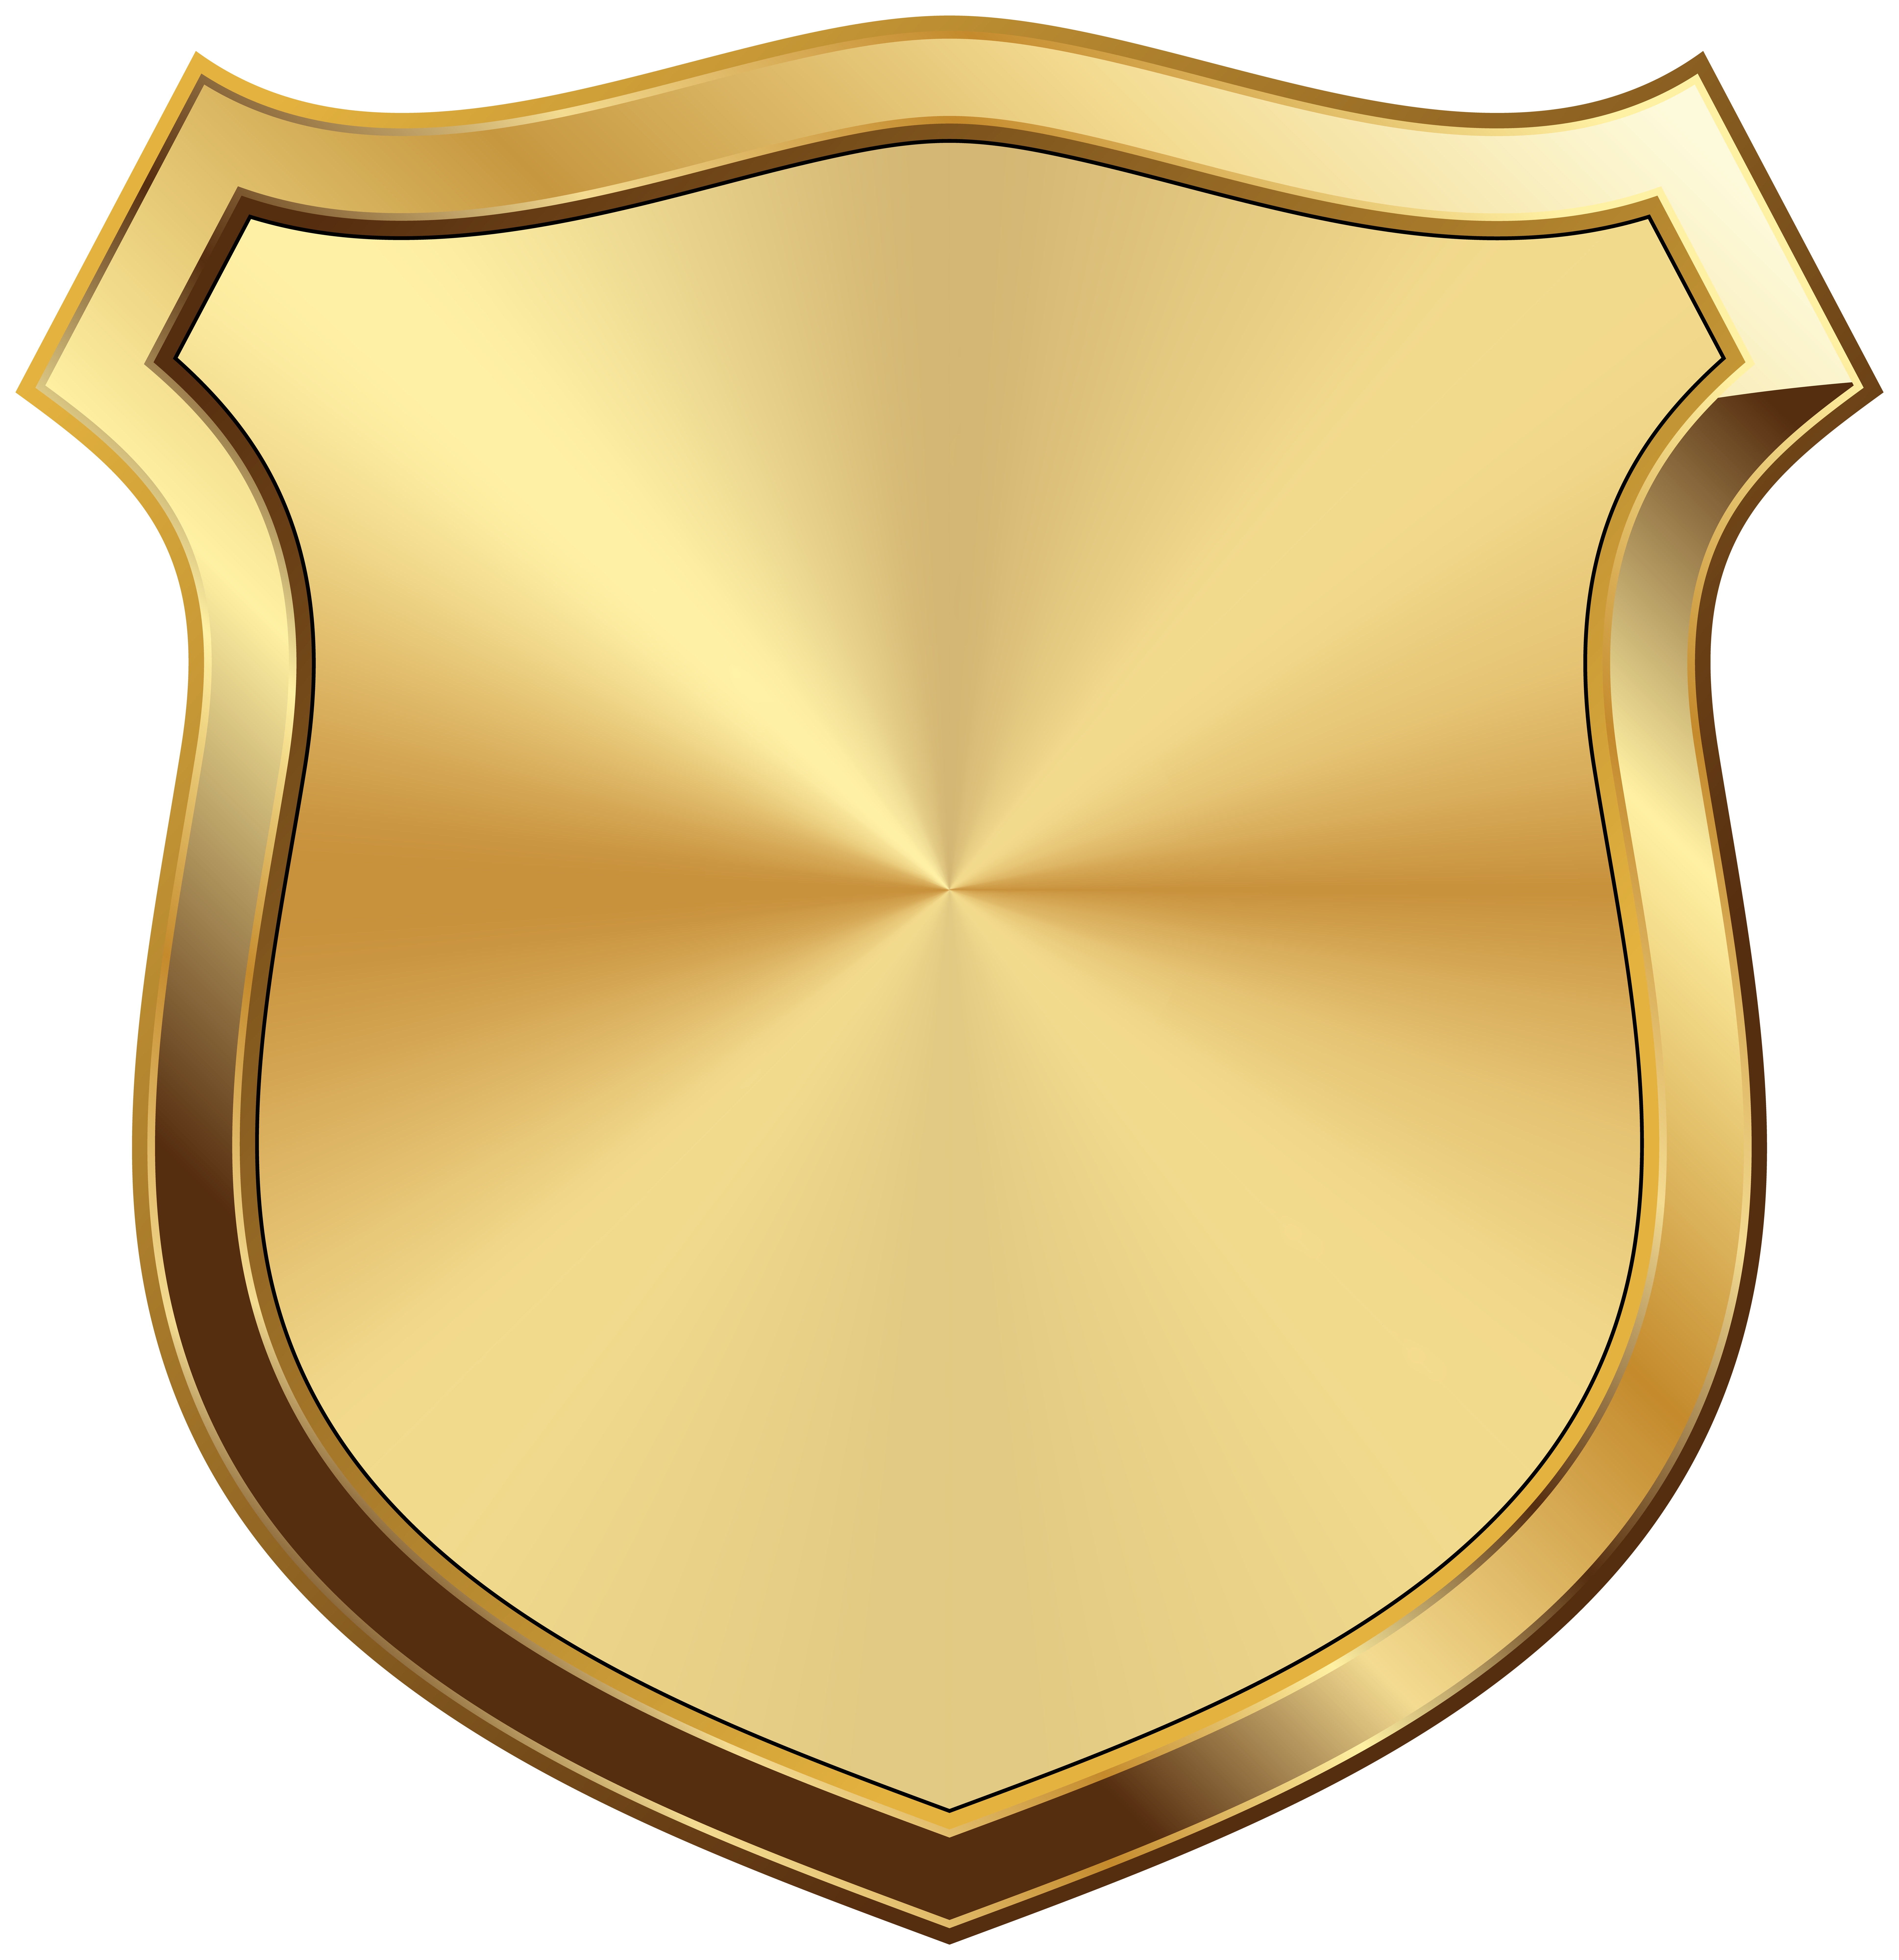 Golden Badges White Transparent, Cartoon Golden Badge Decorative Sticker,  Sticker, Texture, Cartoon PNG Image For Free Download